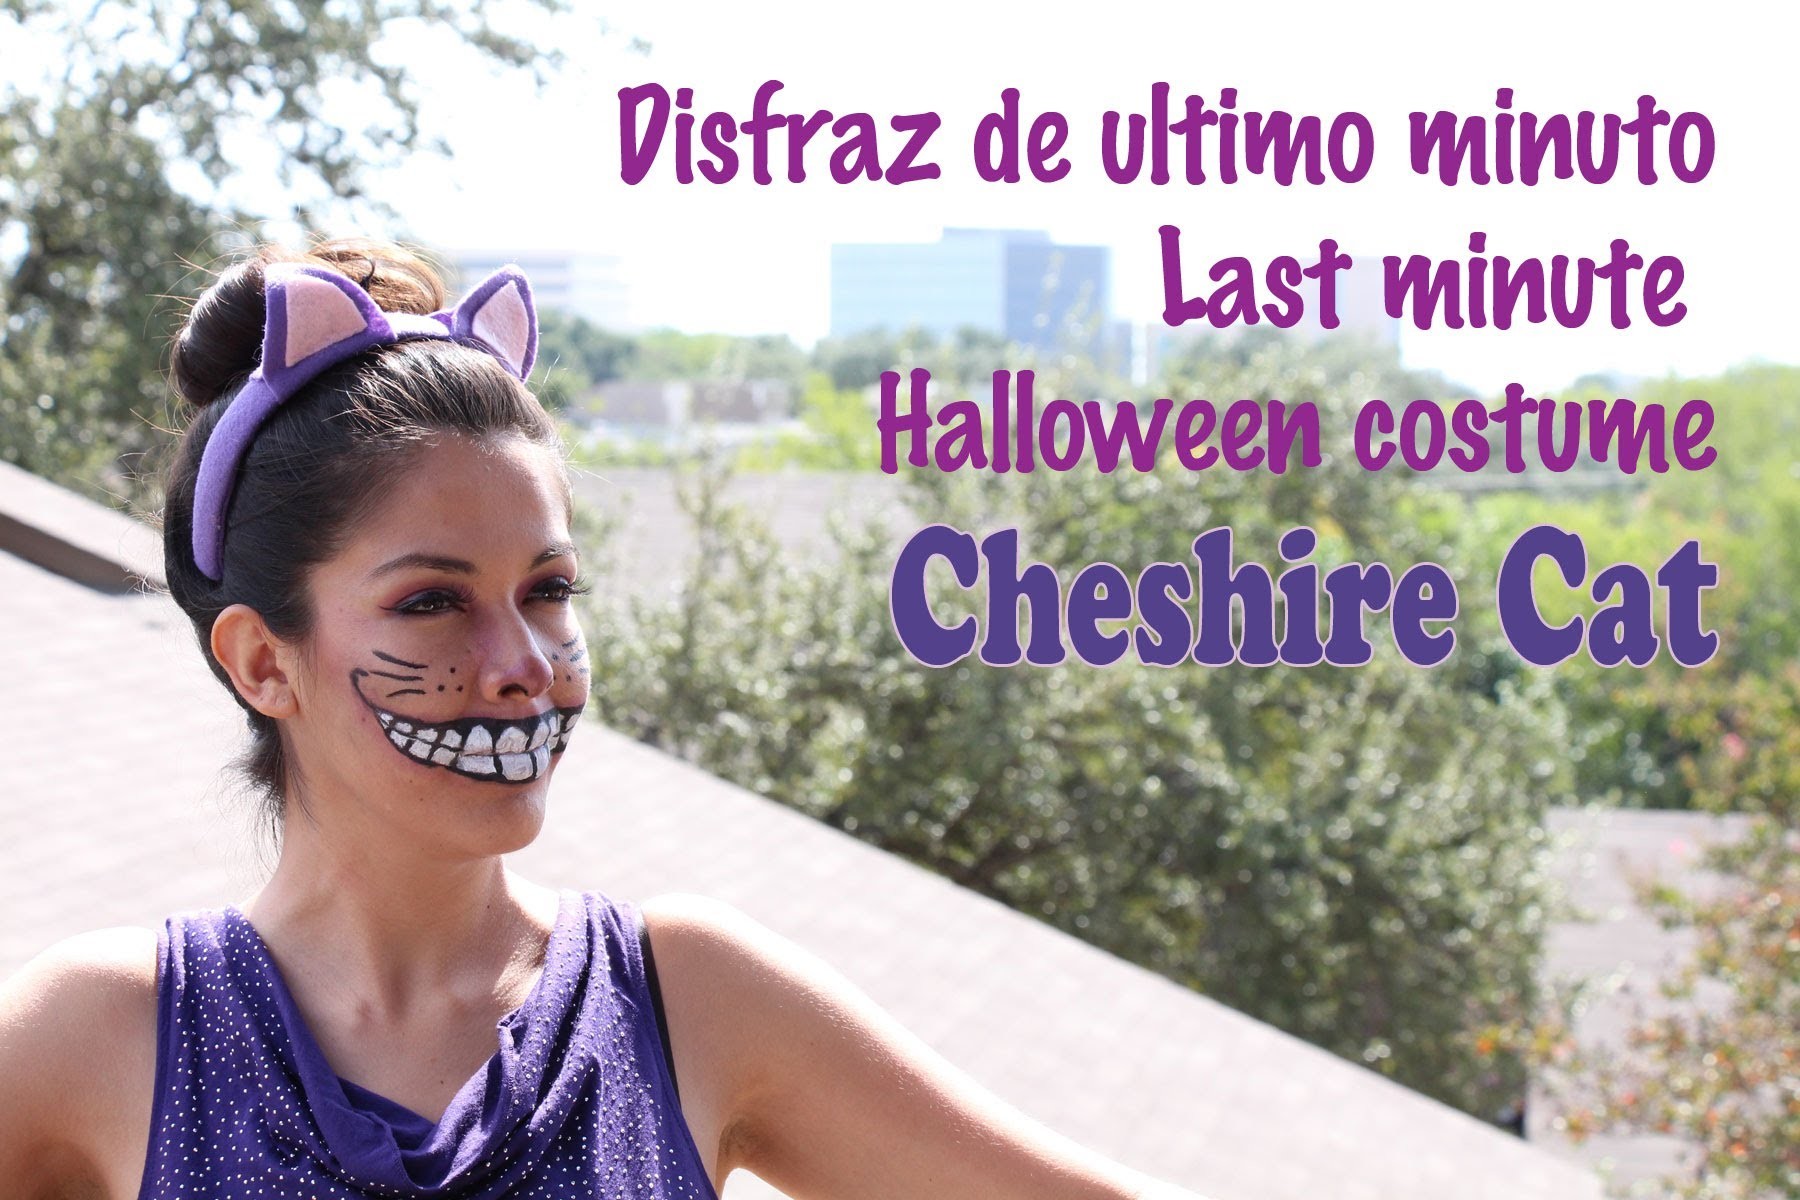 Last minute halloween costume, dizfras de ultimo minuto, Cheshire cat